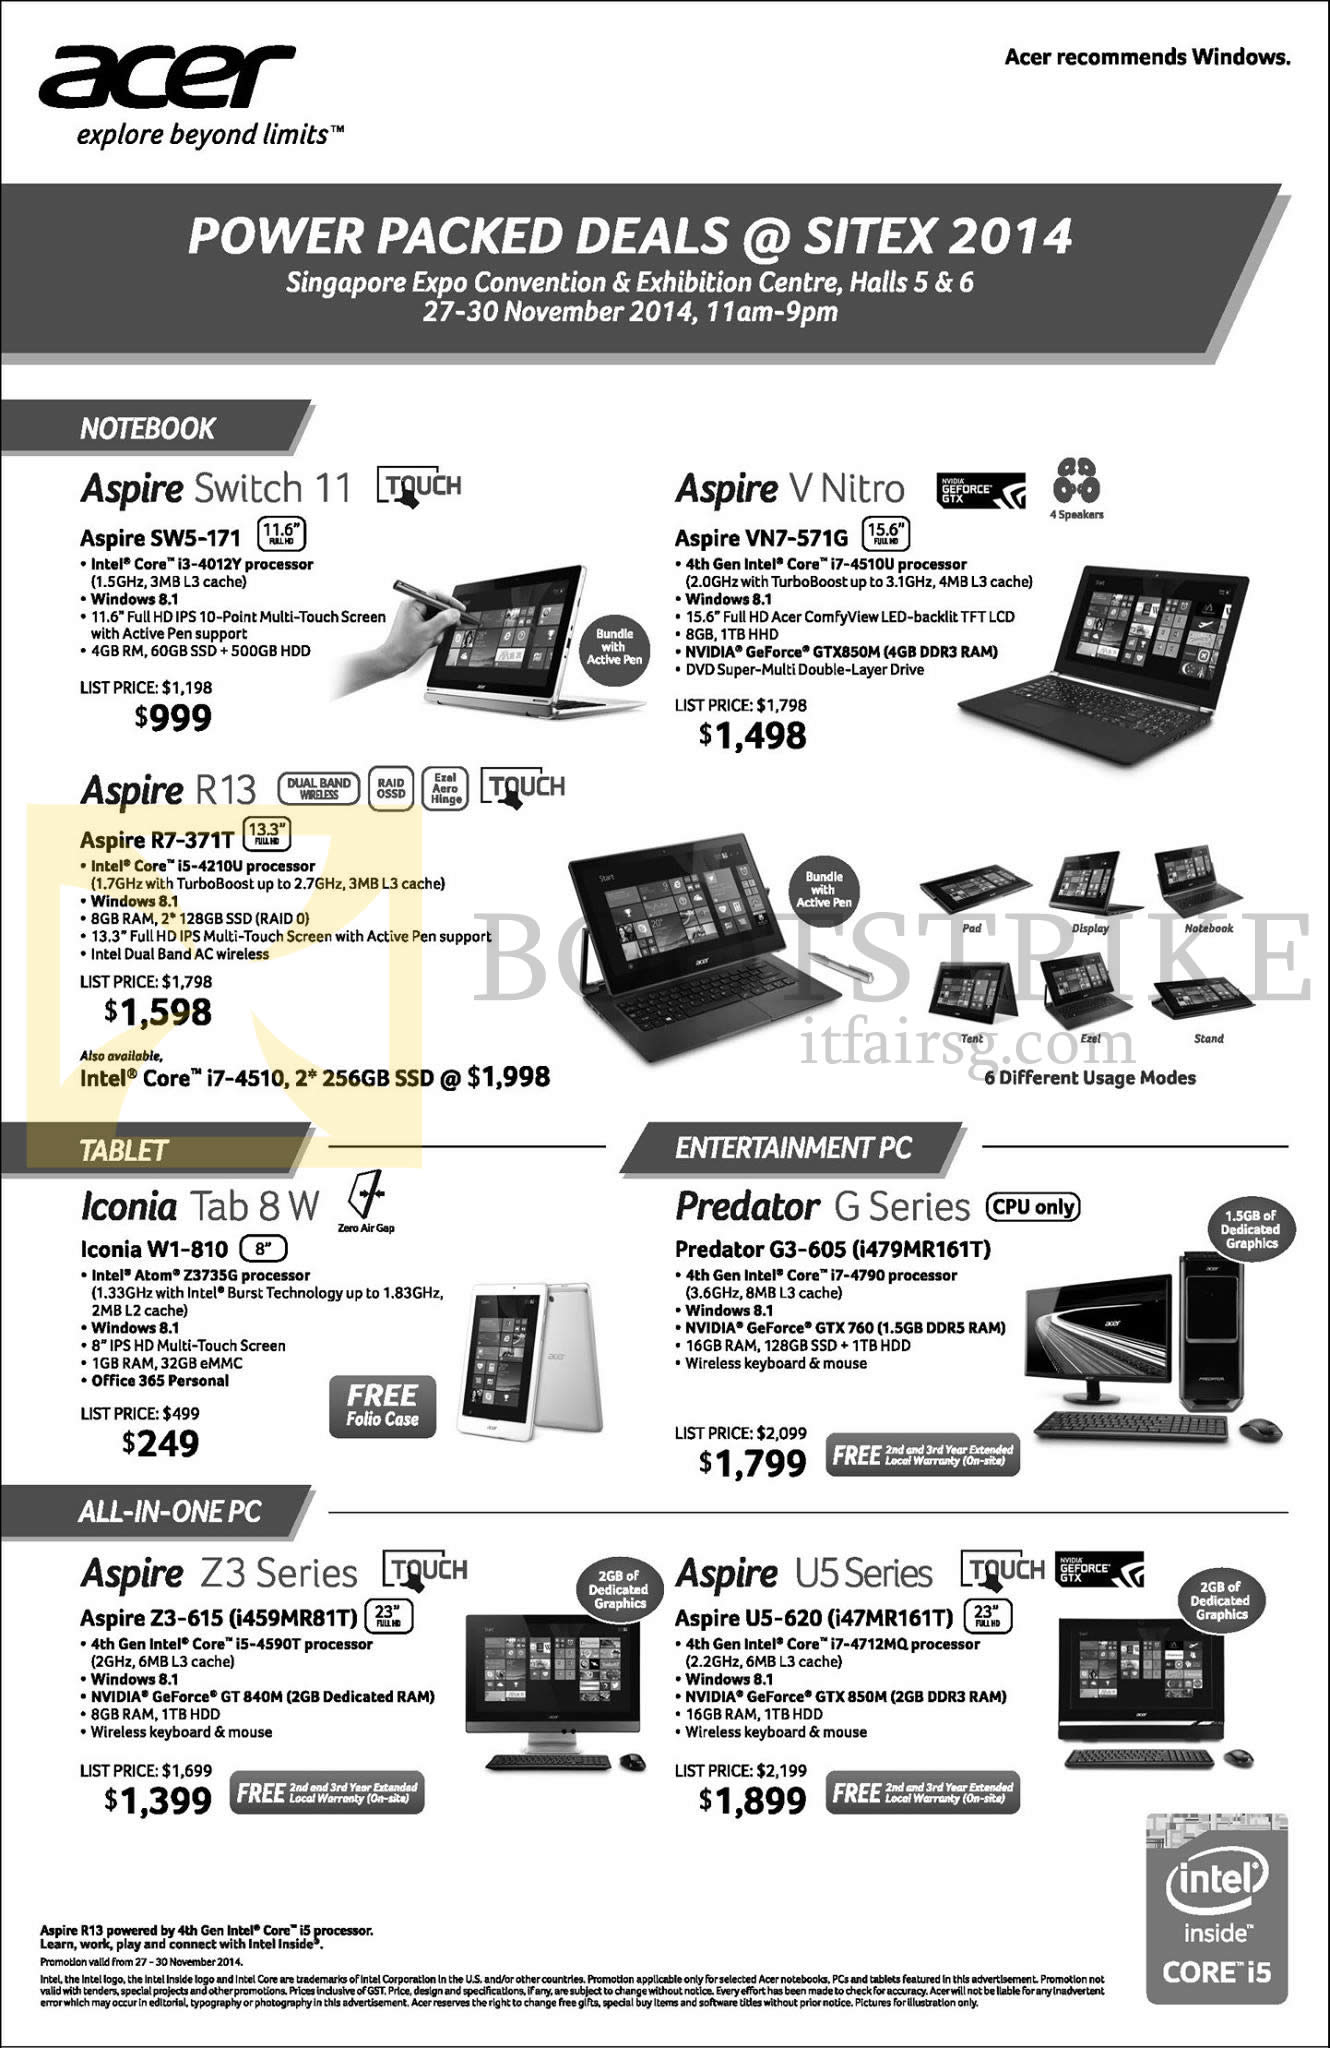 SITEX 2014 price list image brochure of Acer Notebooks, Tablets, Desktop PC, AIO Desktop PCs Aspire Switch 11, V Nitro, R13, Z3, U5, Iconia Tab 8 W, Predator G